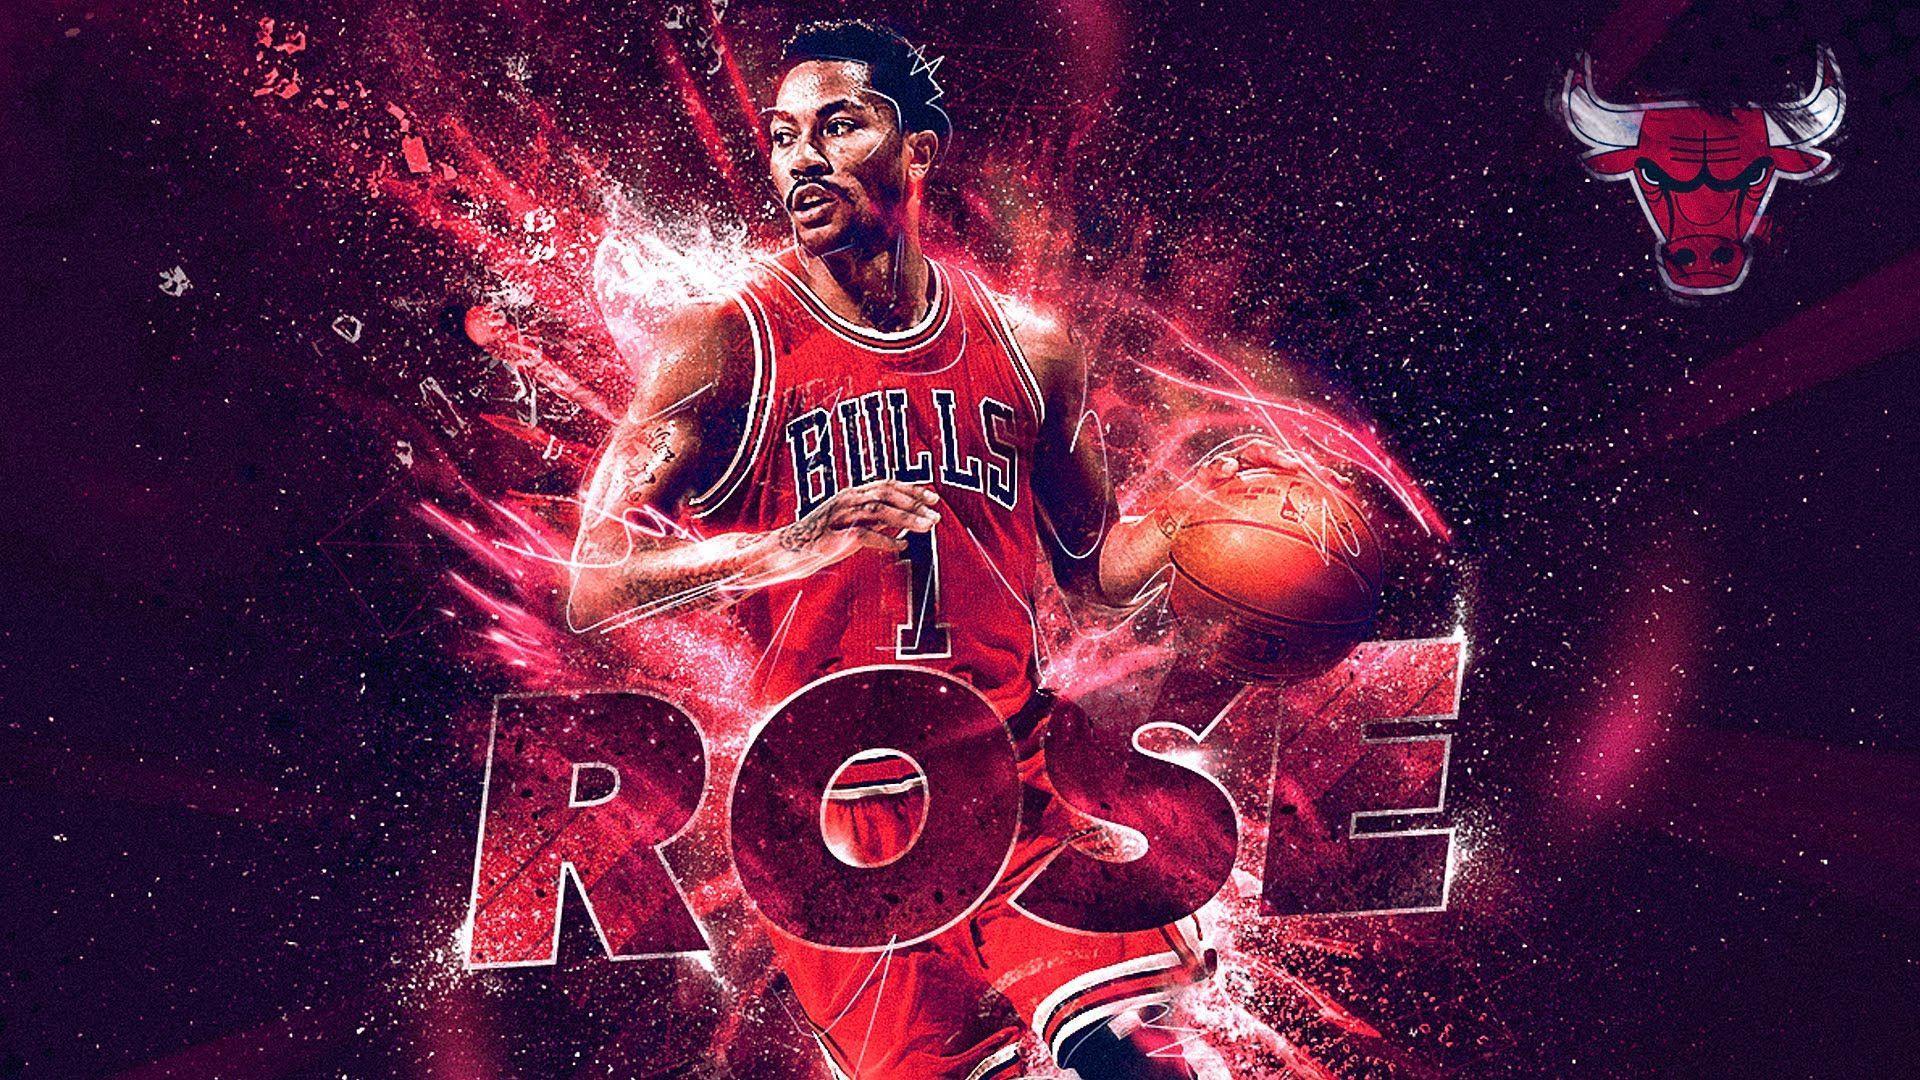 Derrick Rose wallpaper by zollitima - Download on ZEDGE™